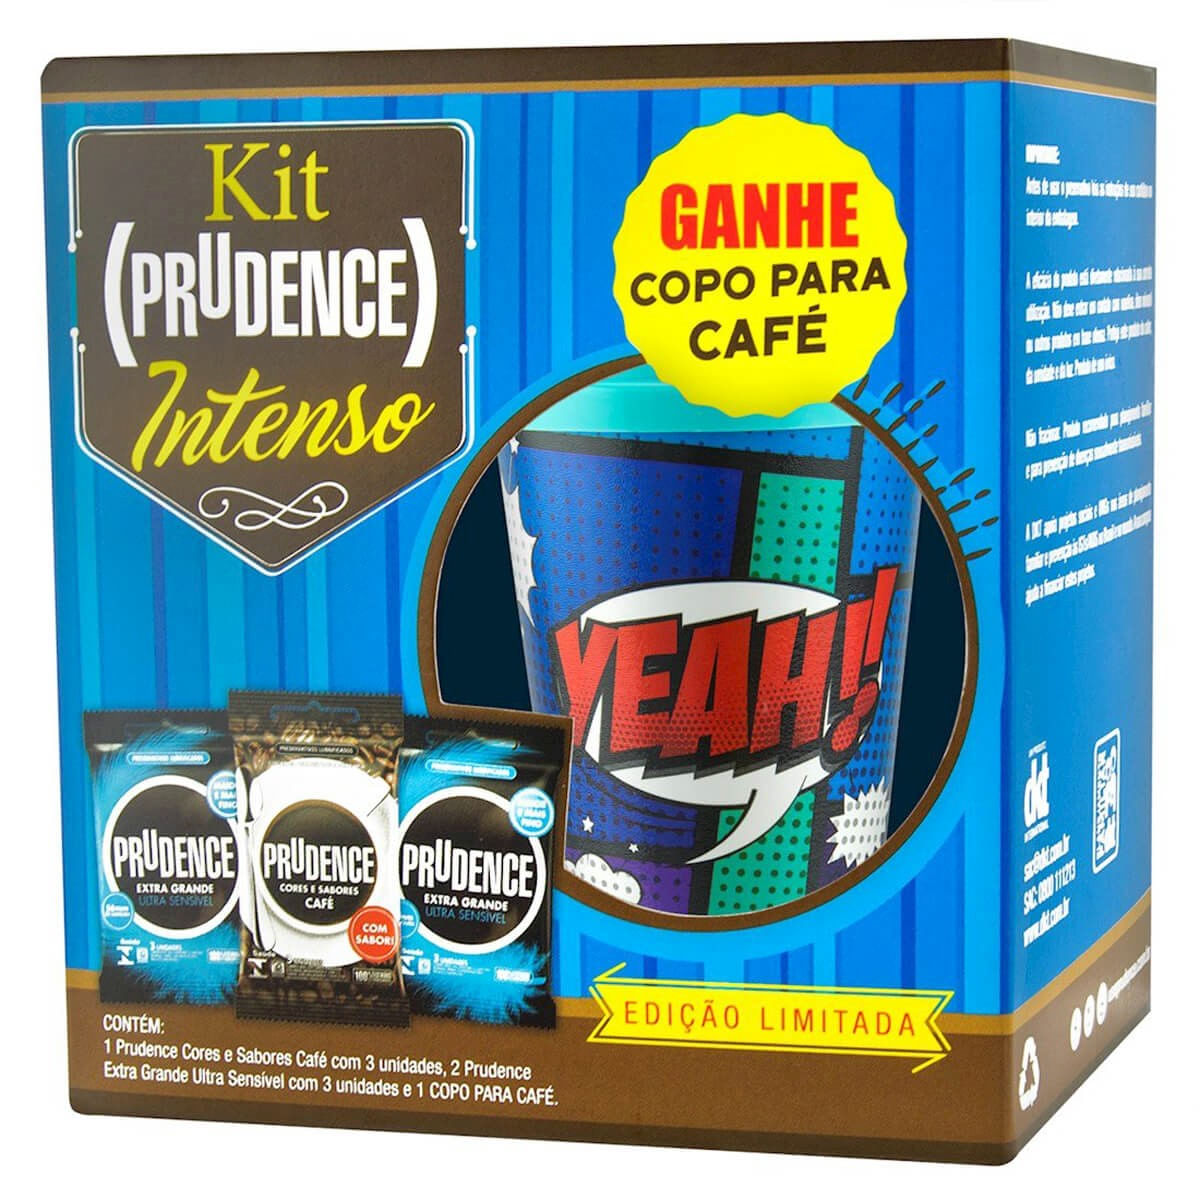 Kit Prudence Intenso com Preservativo e Copo para Café Prudence